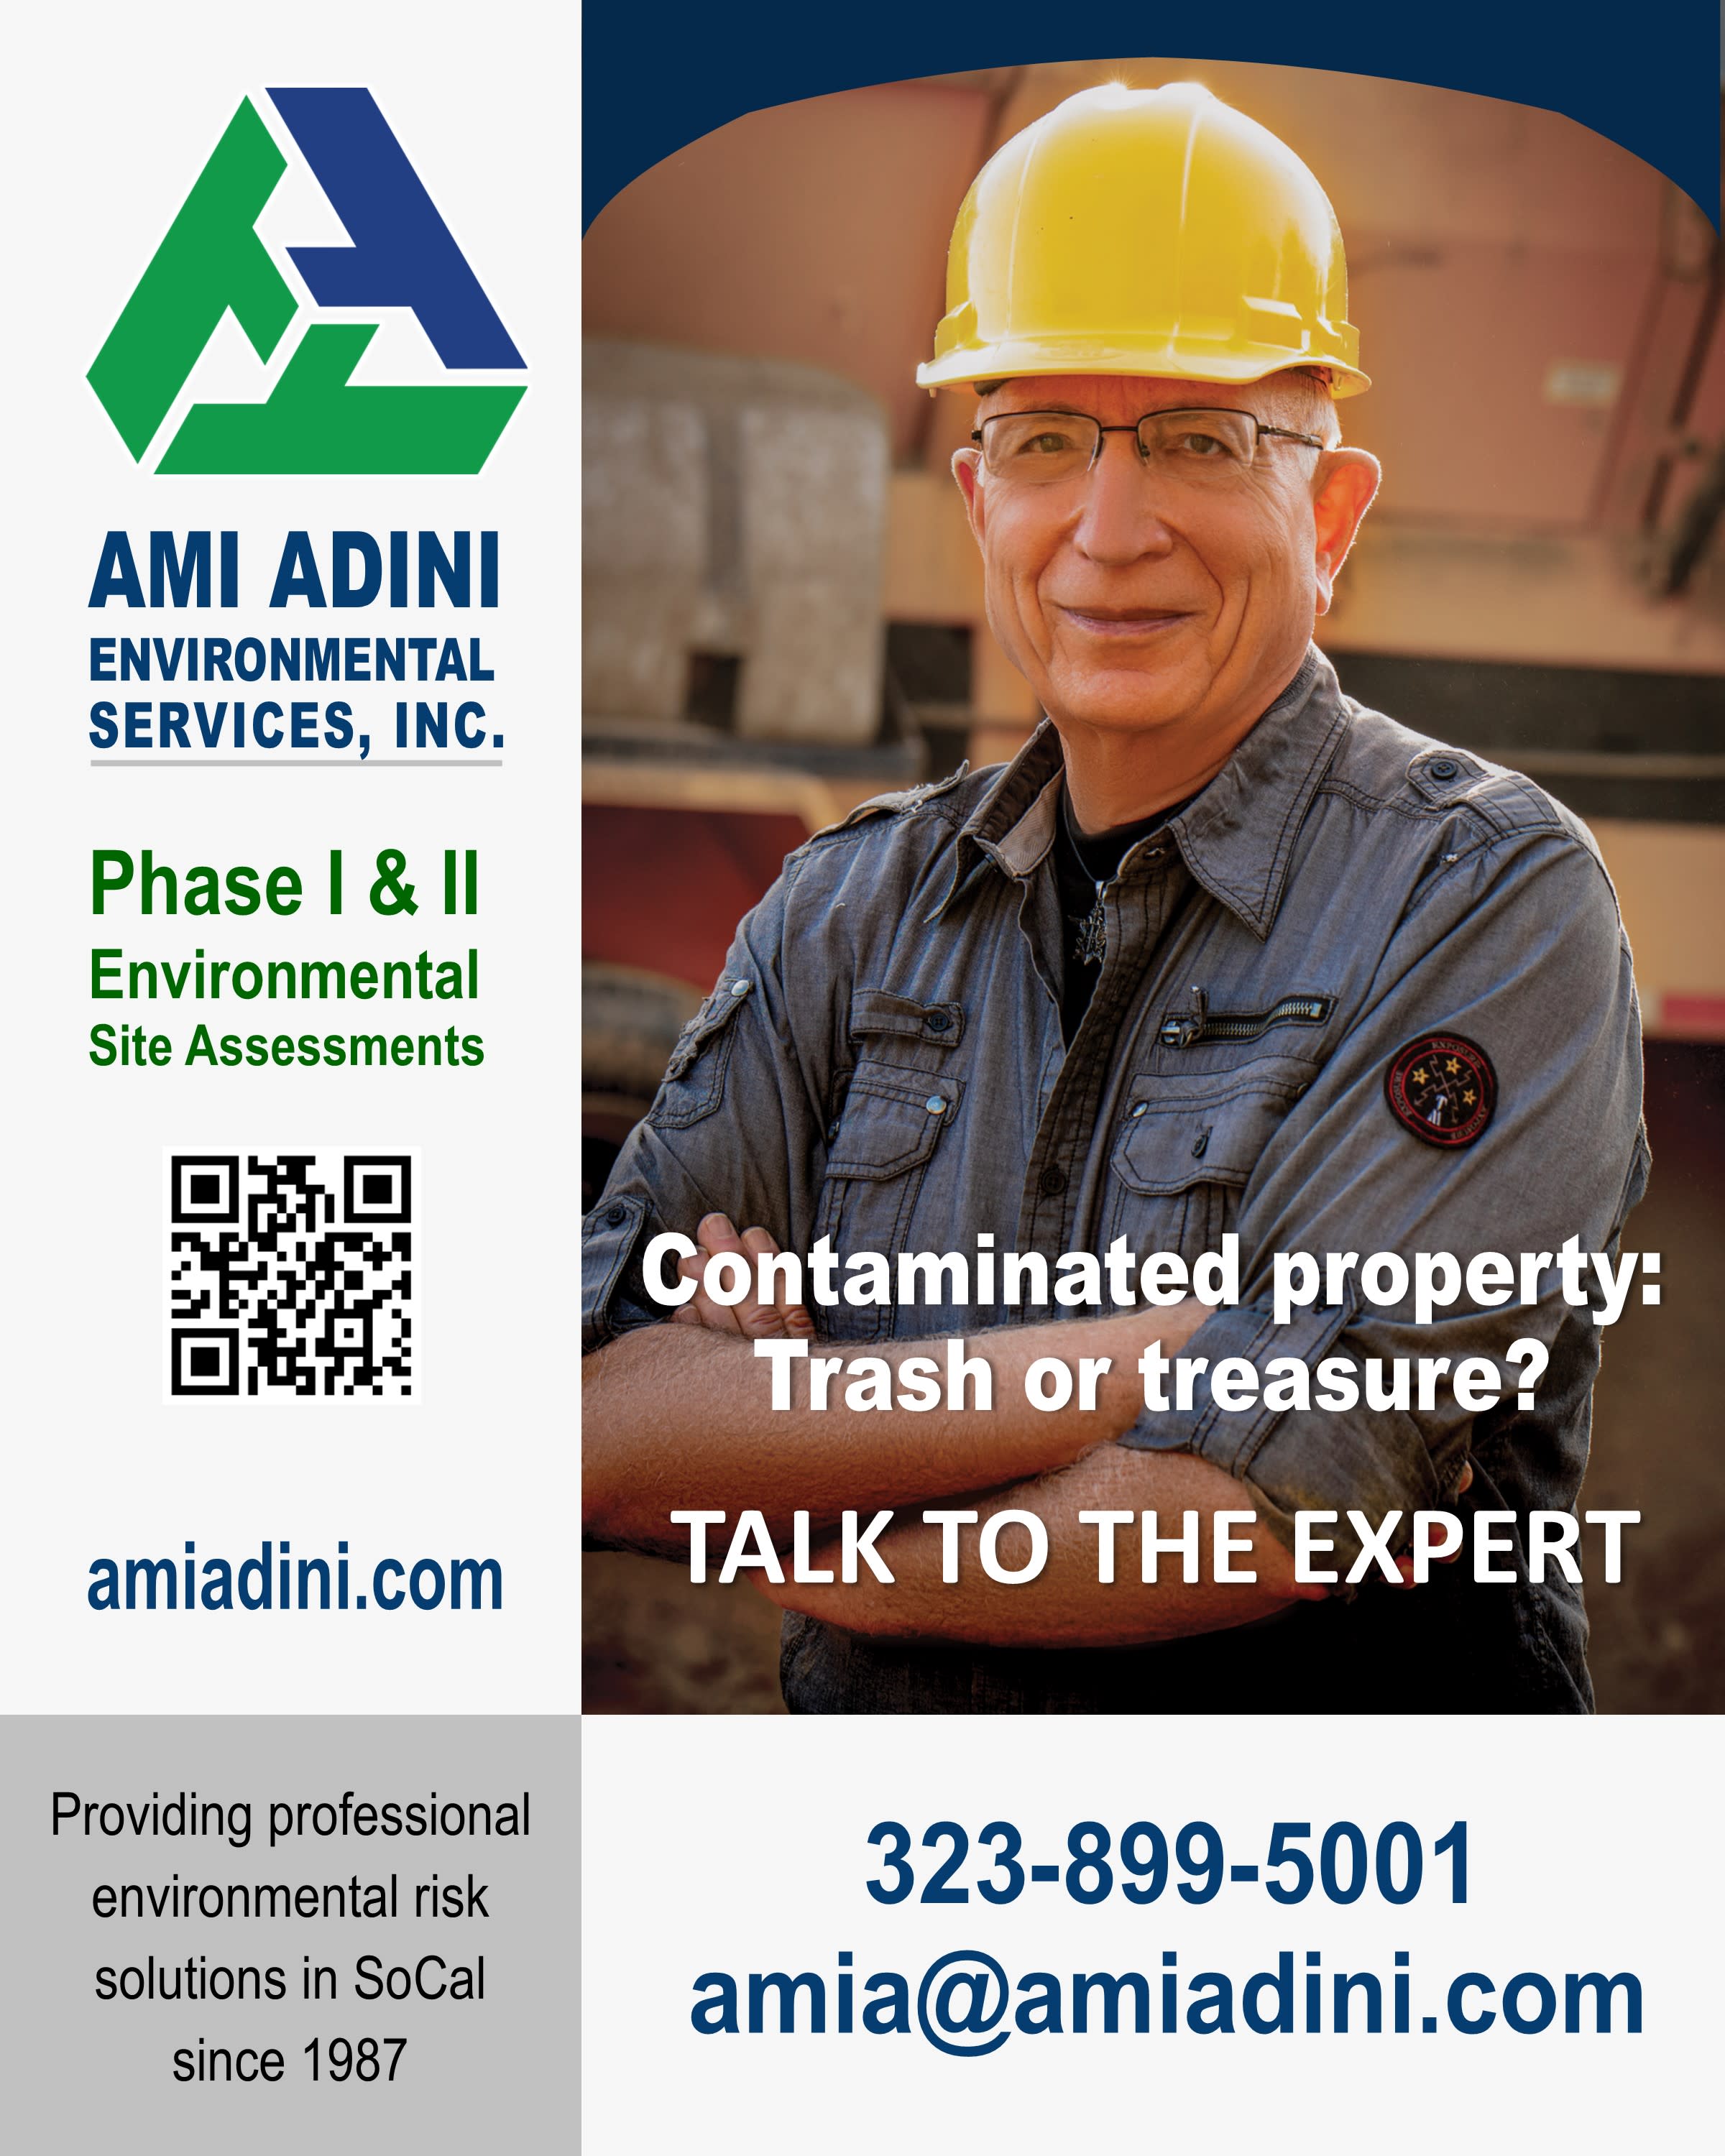 Ami Adini Environmental Services, Inc.